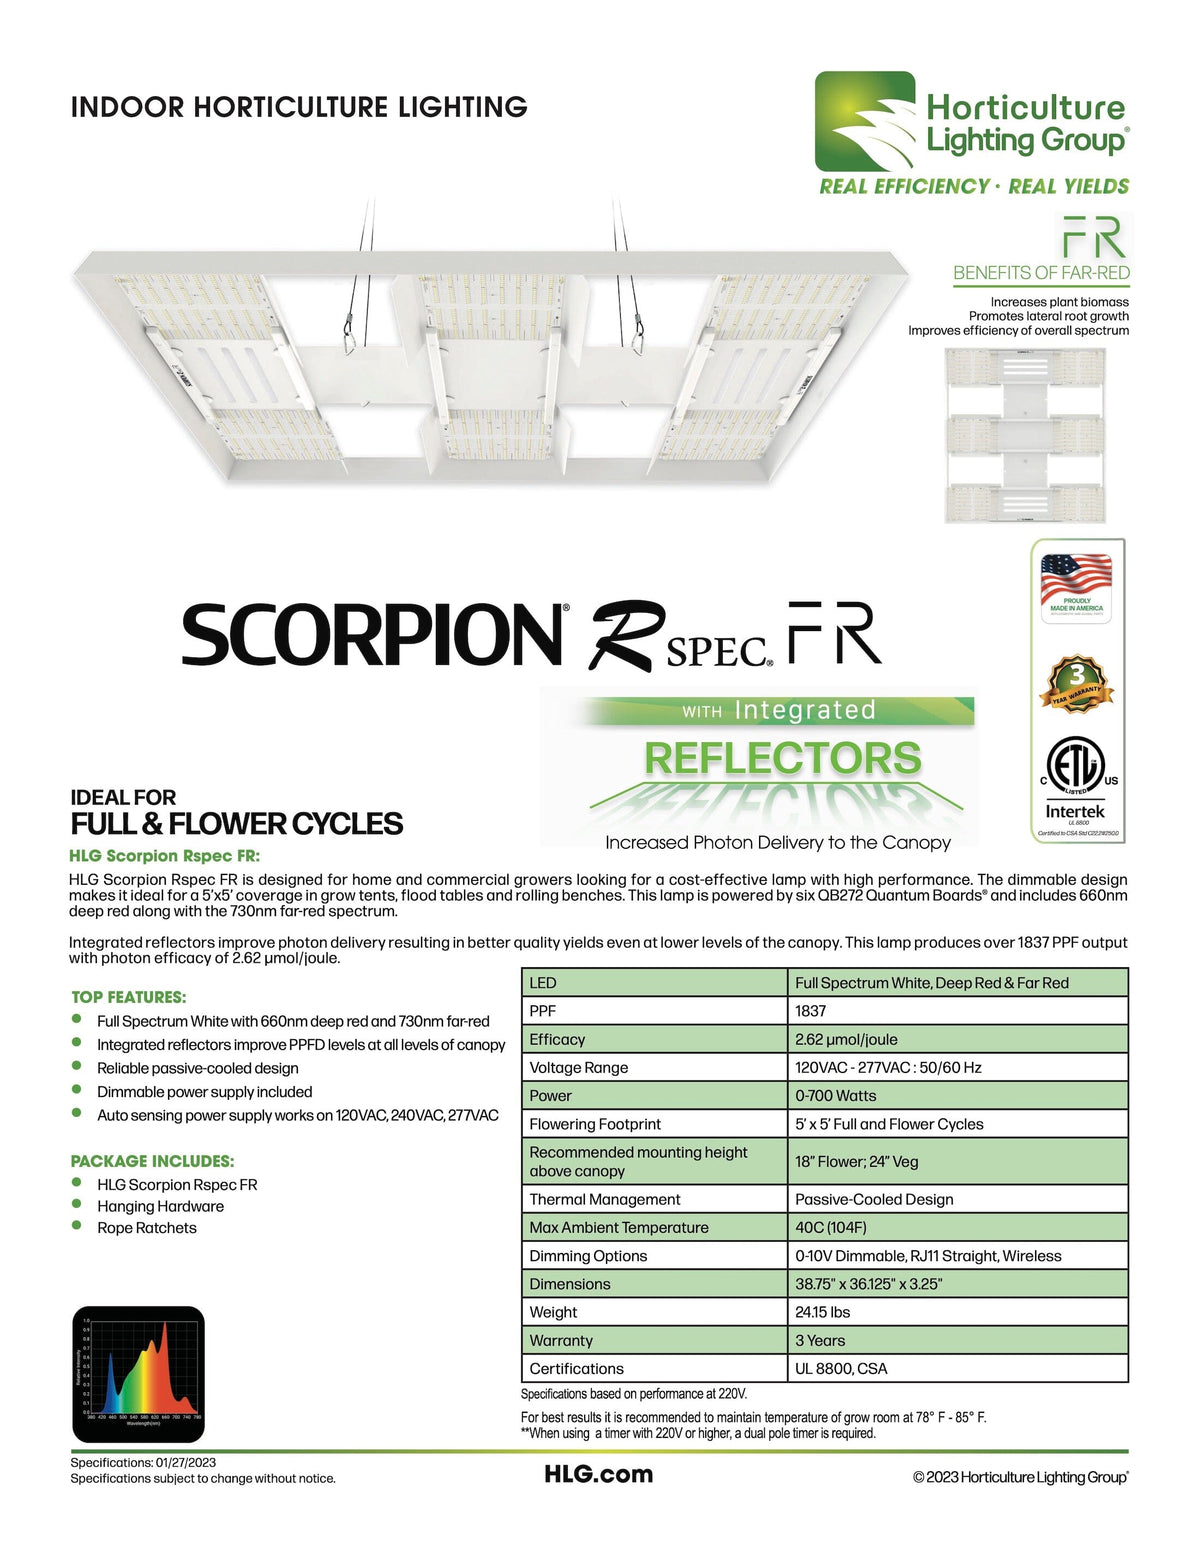 New HLG Scorpion Rspec FR